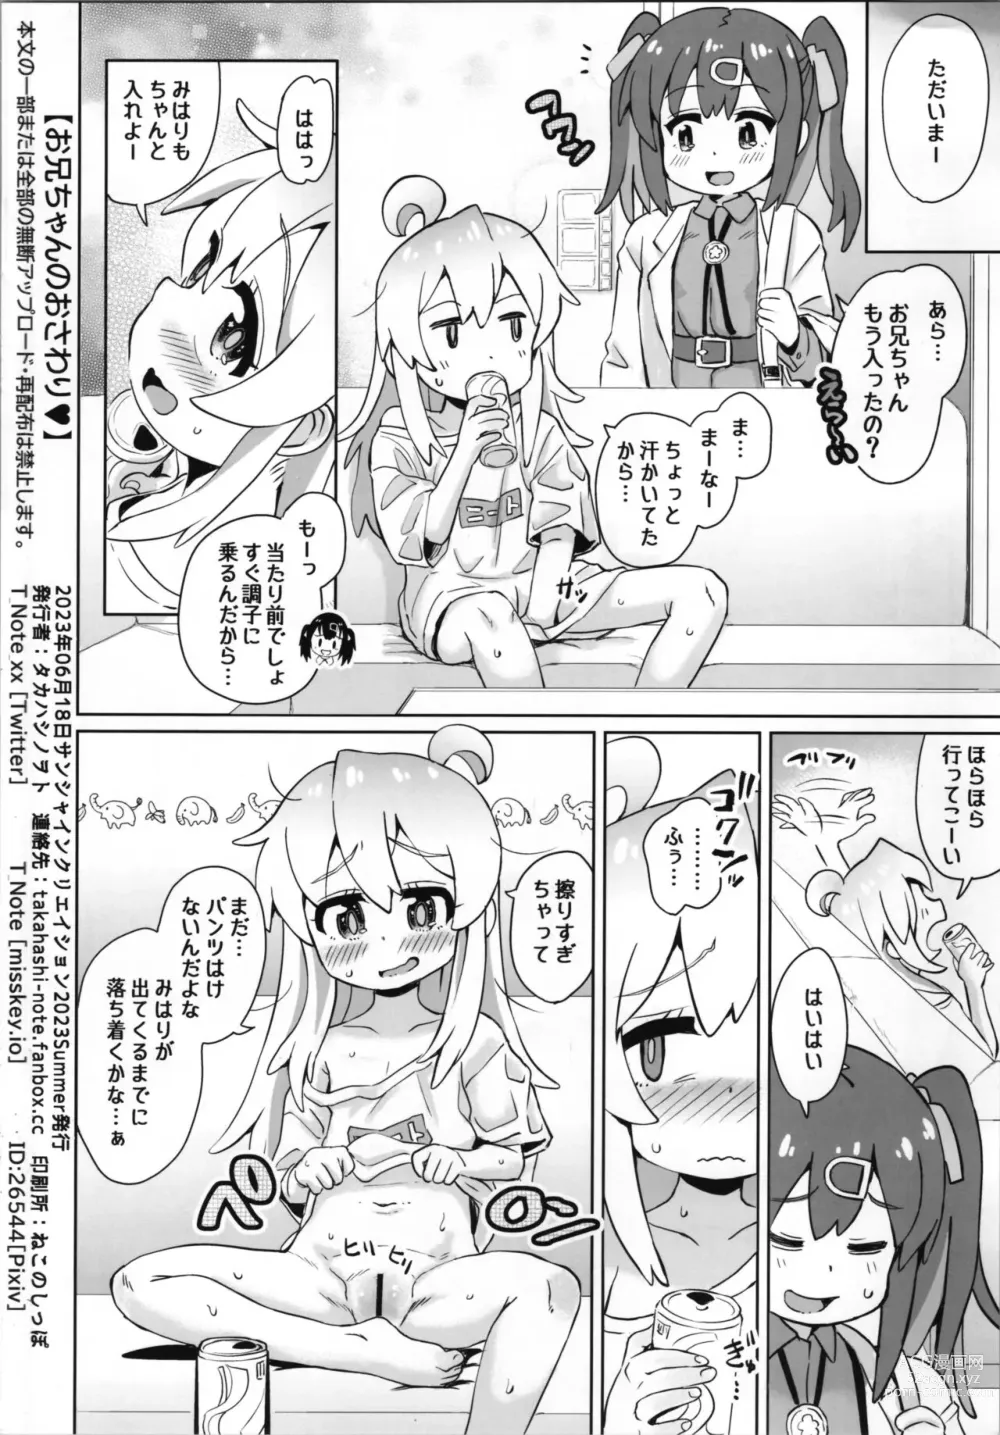 Page 12 of doujinshi Onii-chan no Osawari